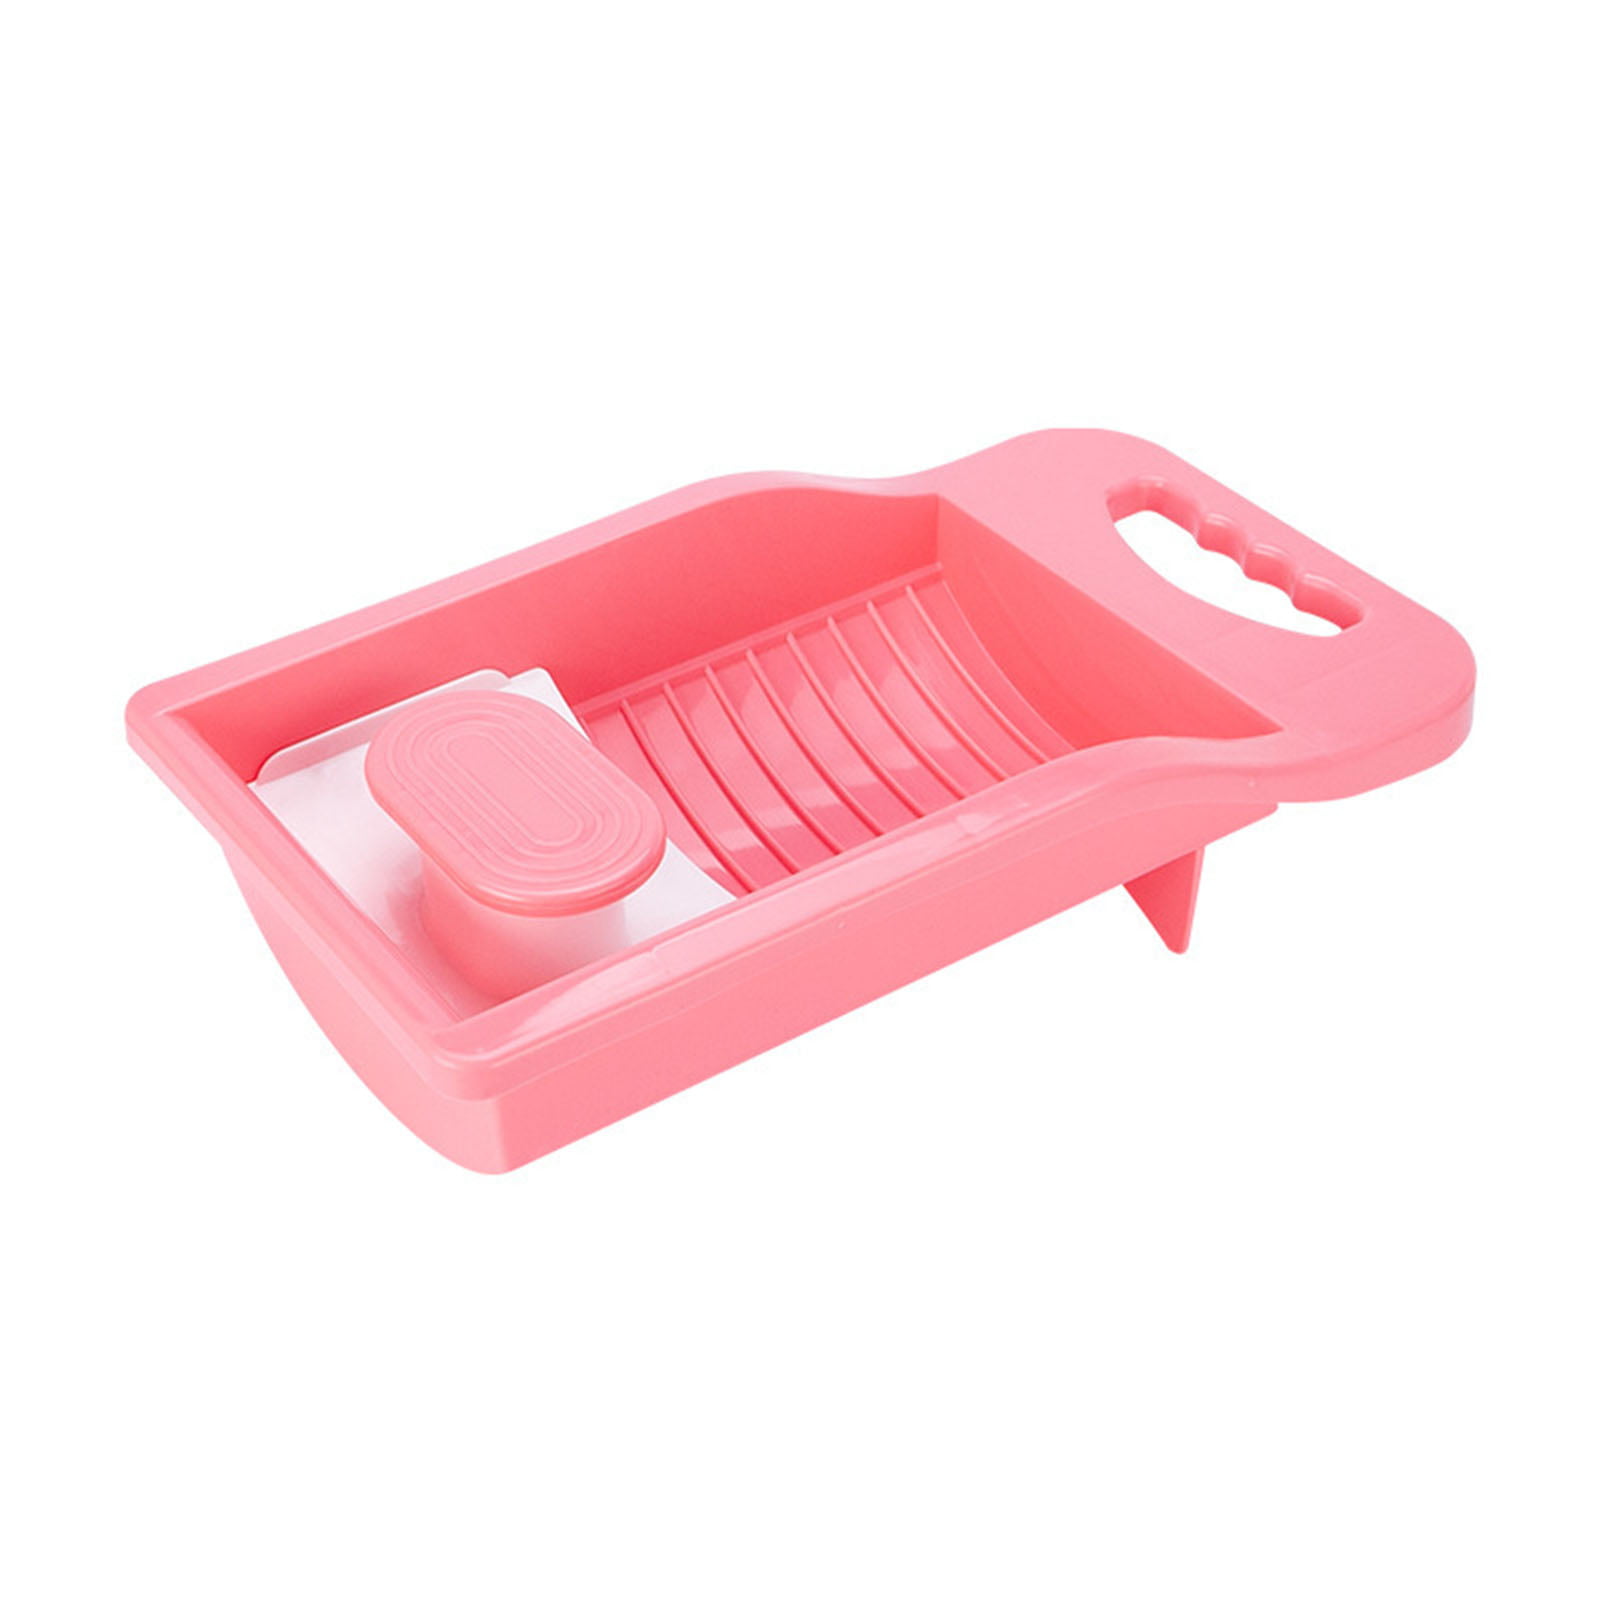 Attachable Plastic Washboard Tool B5K4 